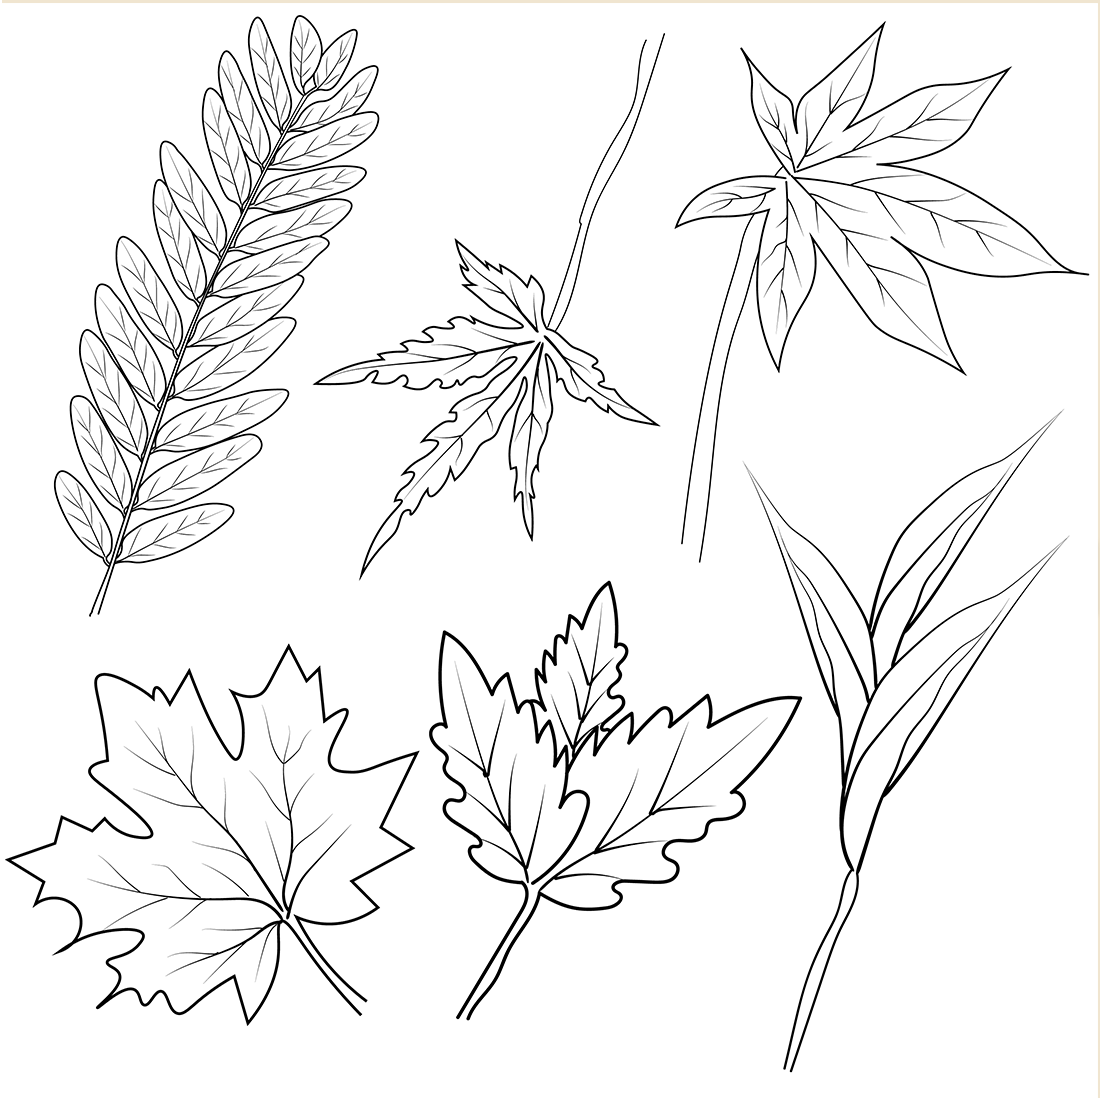 Prints of Black and white digital illustration of maple leaf